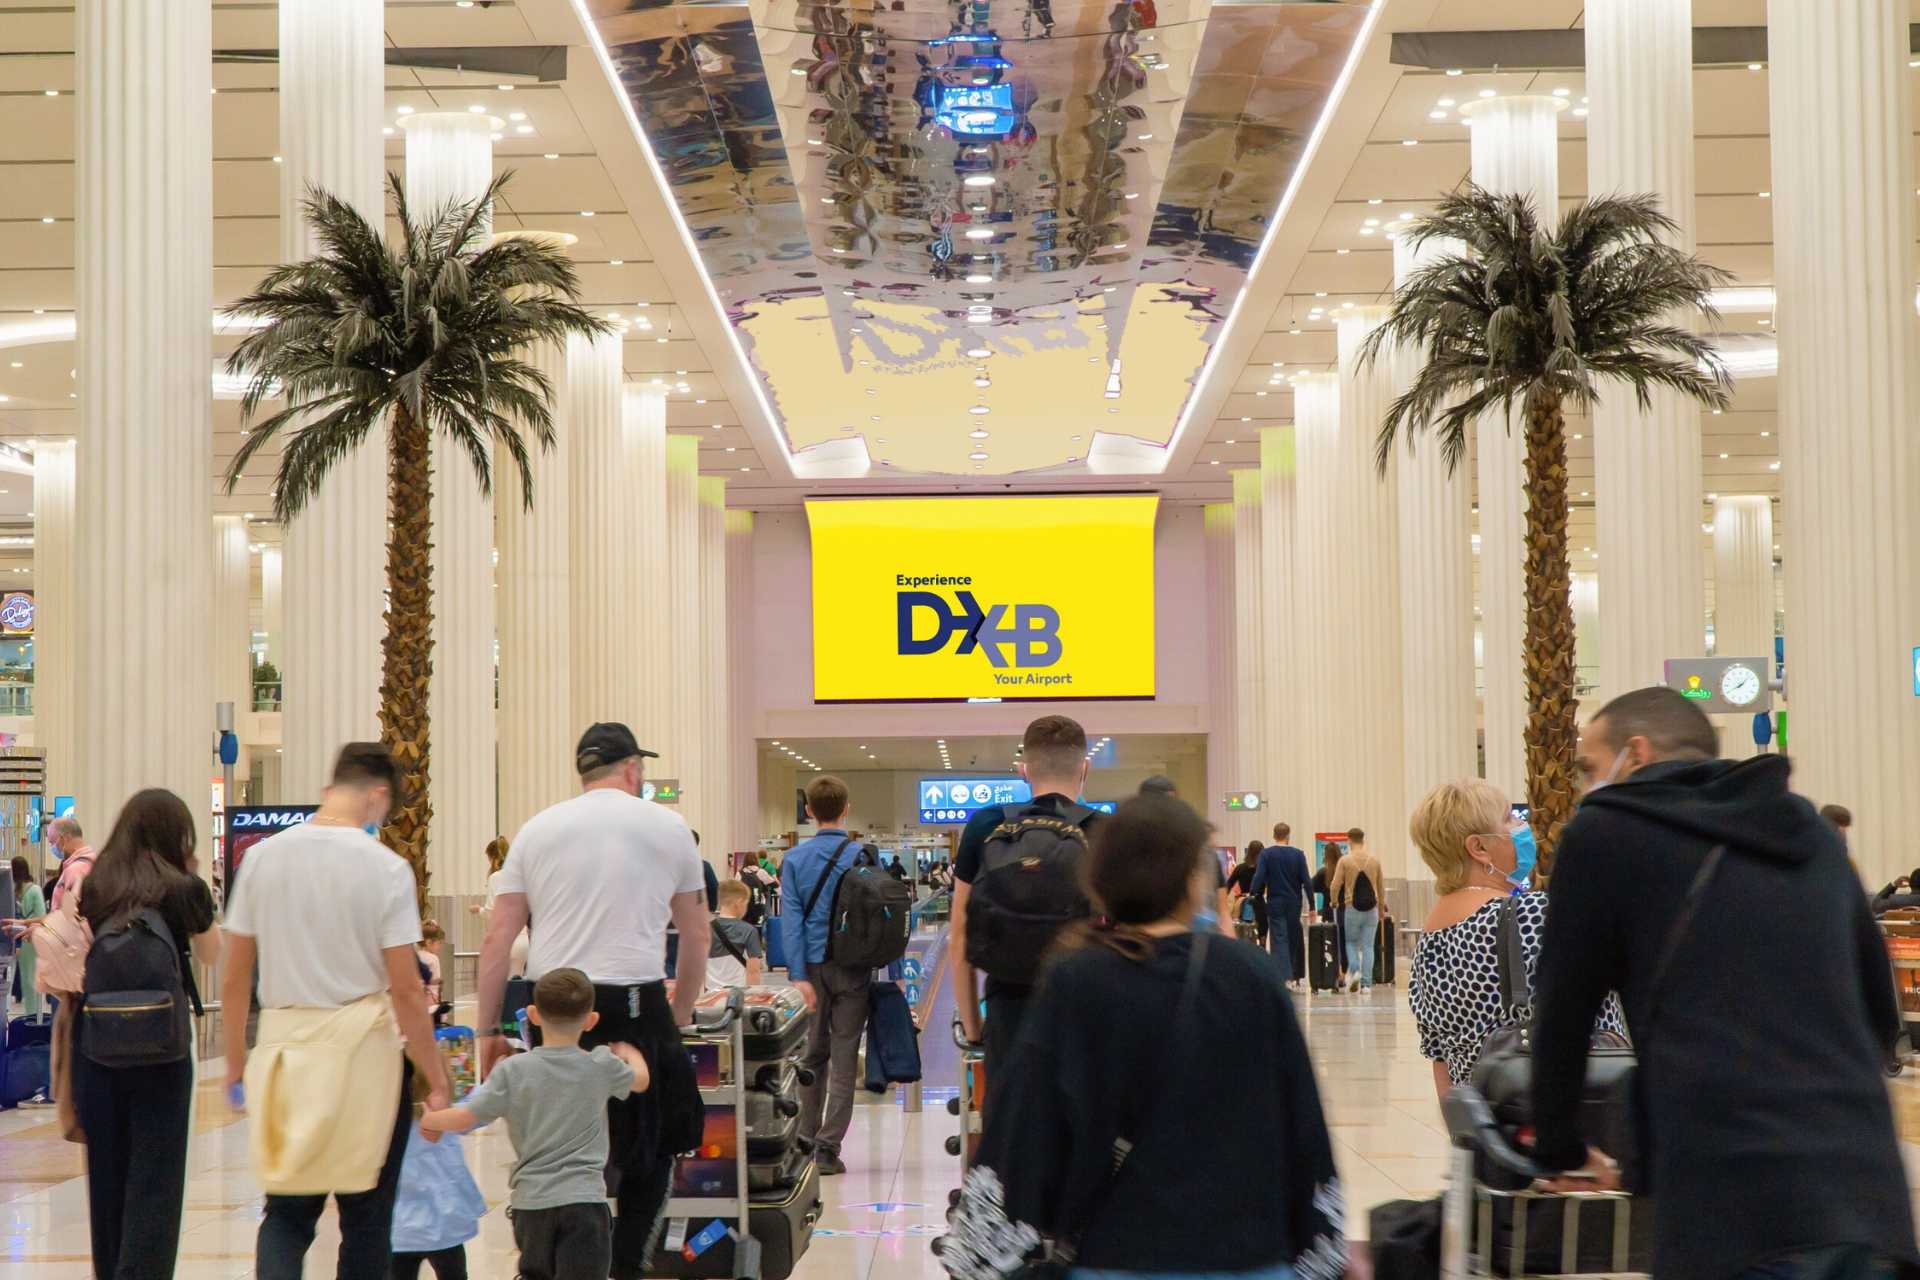 Arrivals hall at Terminal 3 ©Dubai International Airport